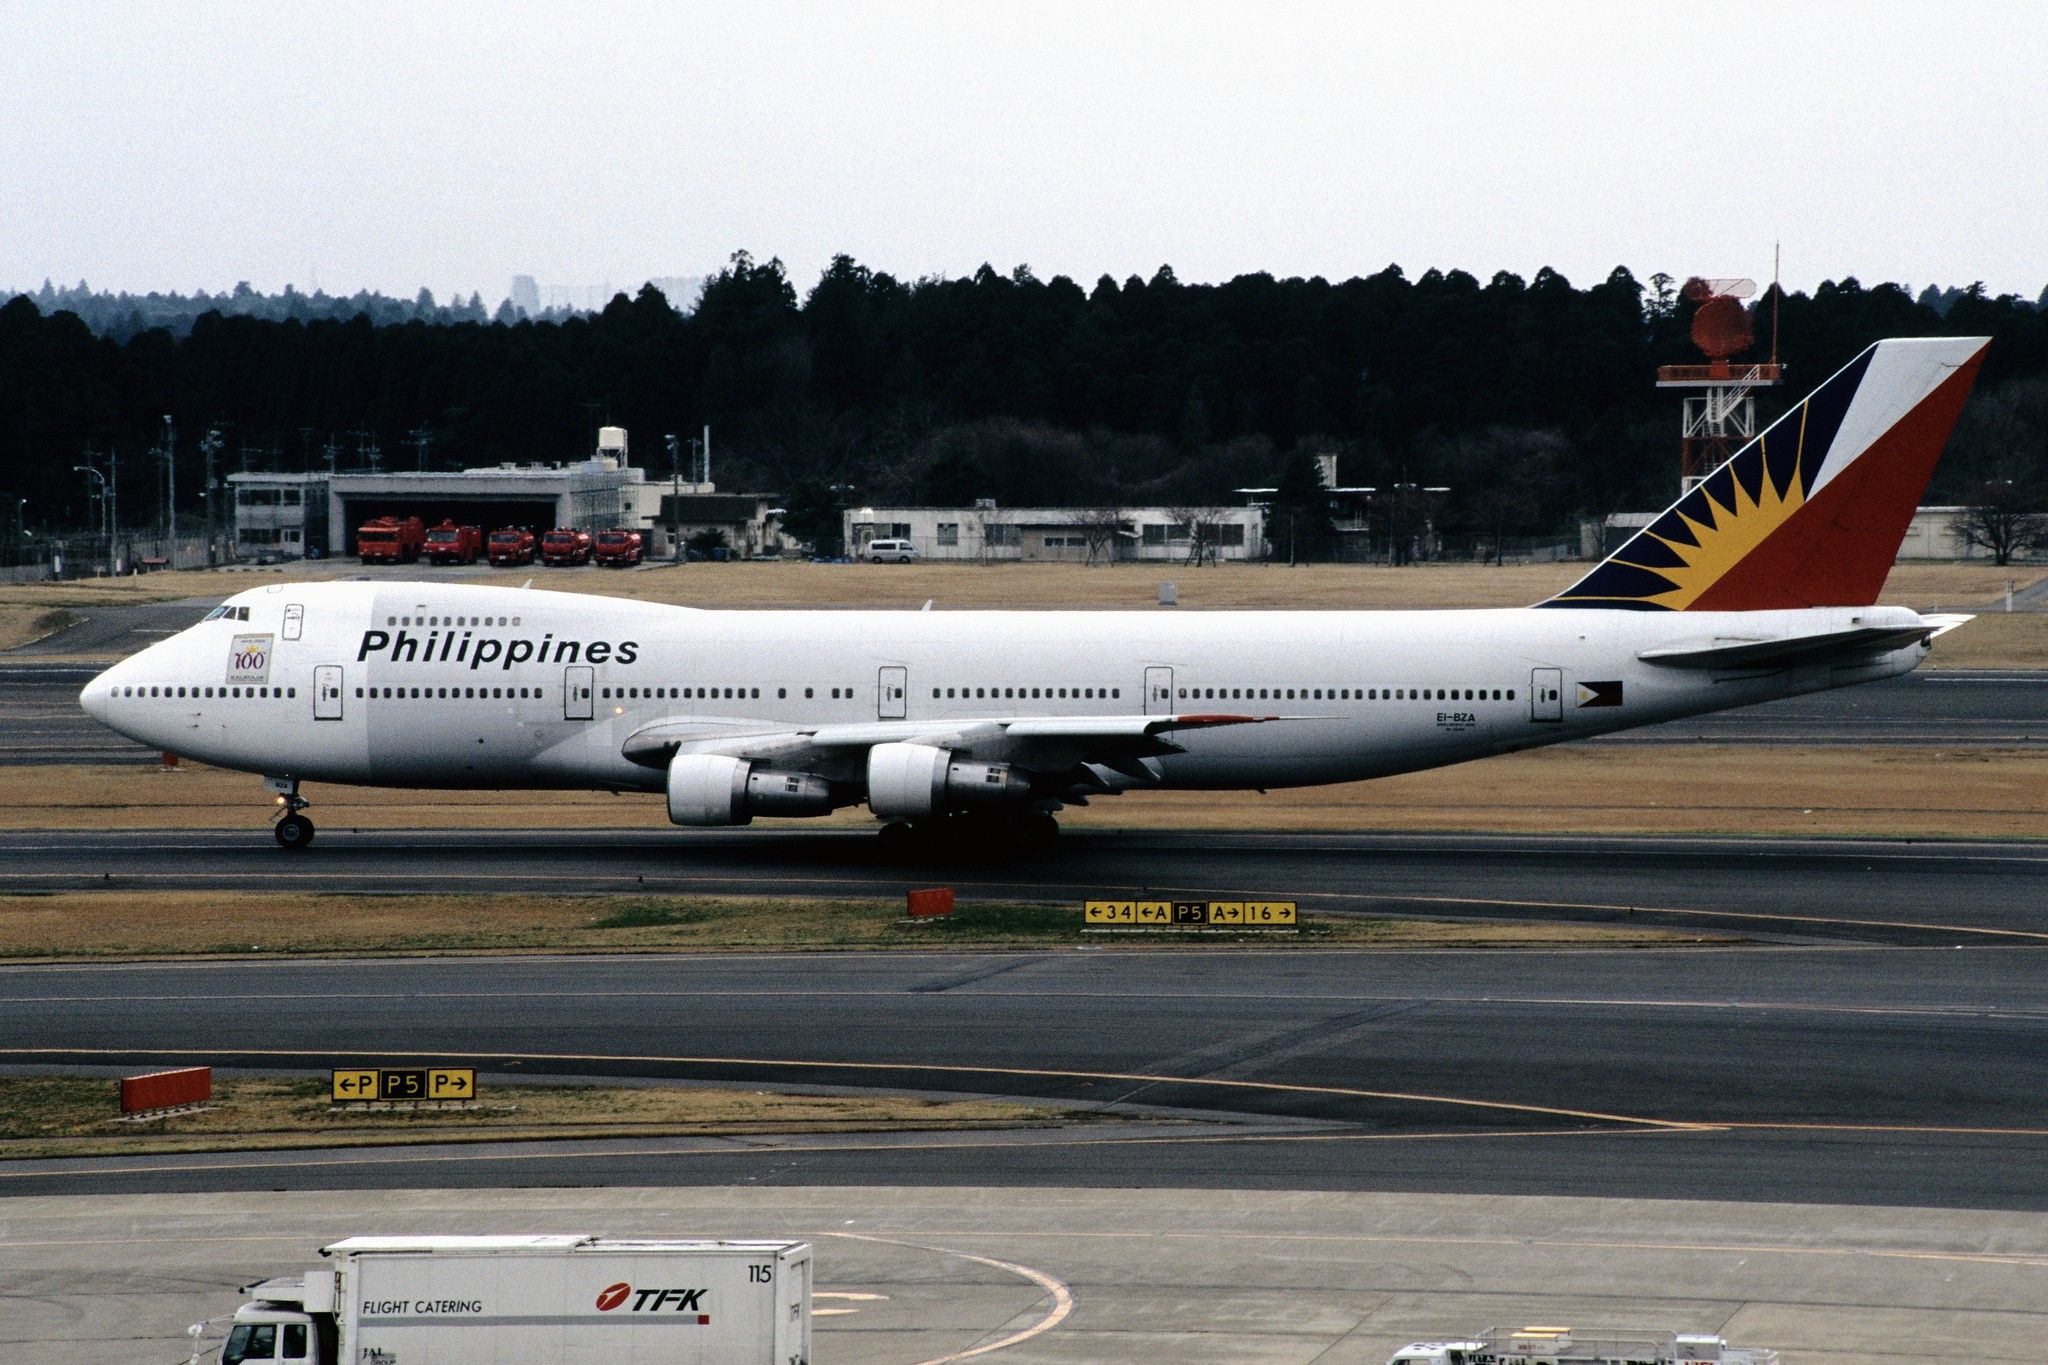 philippine airlines flight 434